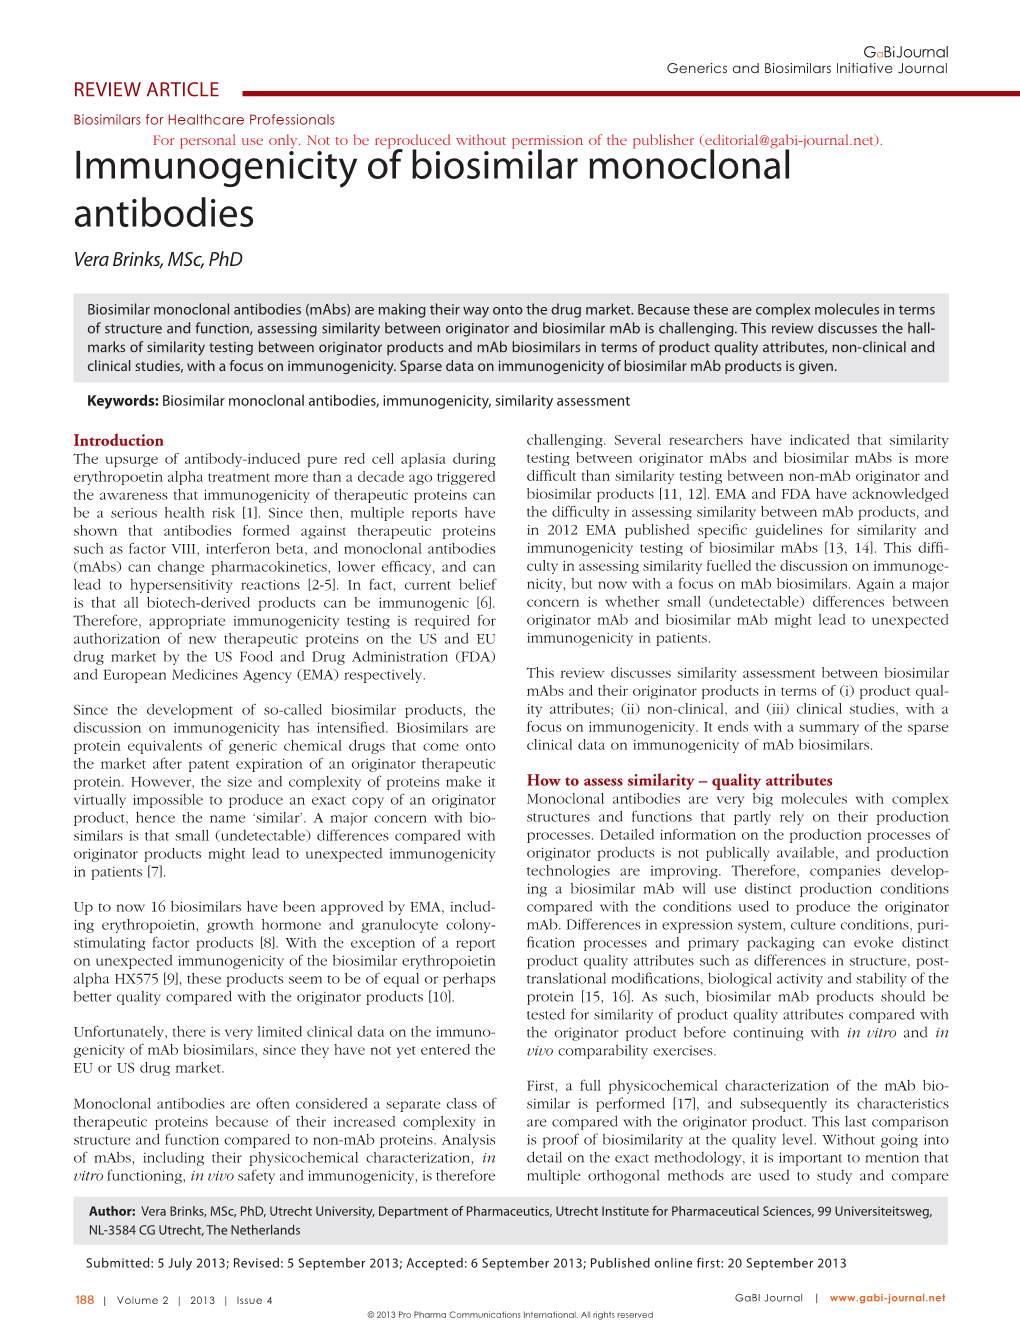 Immunogenicity of Biosimilar Monoclonal Antibodies Vera Brinks, Msc, Phd